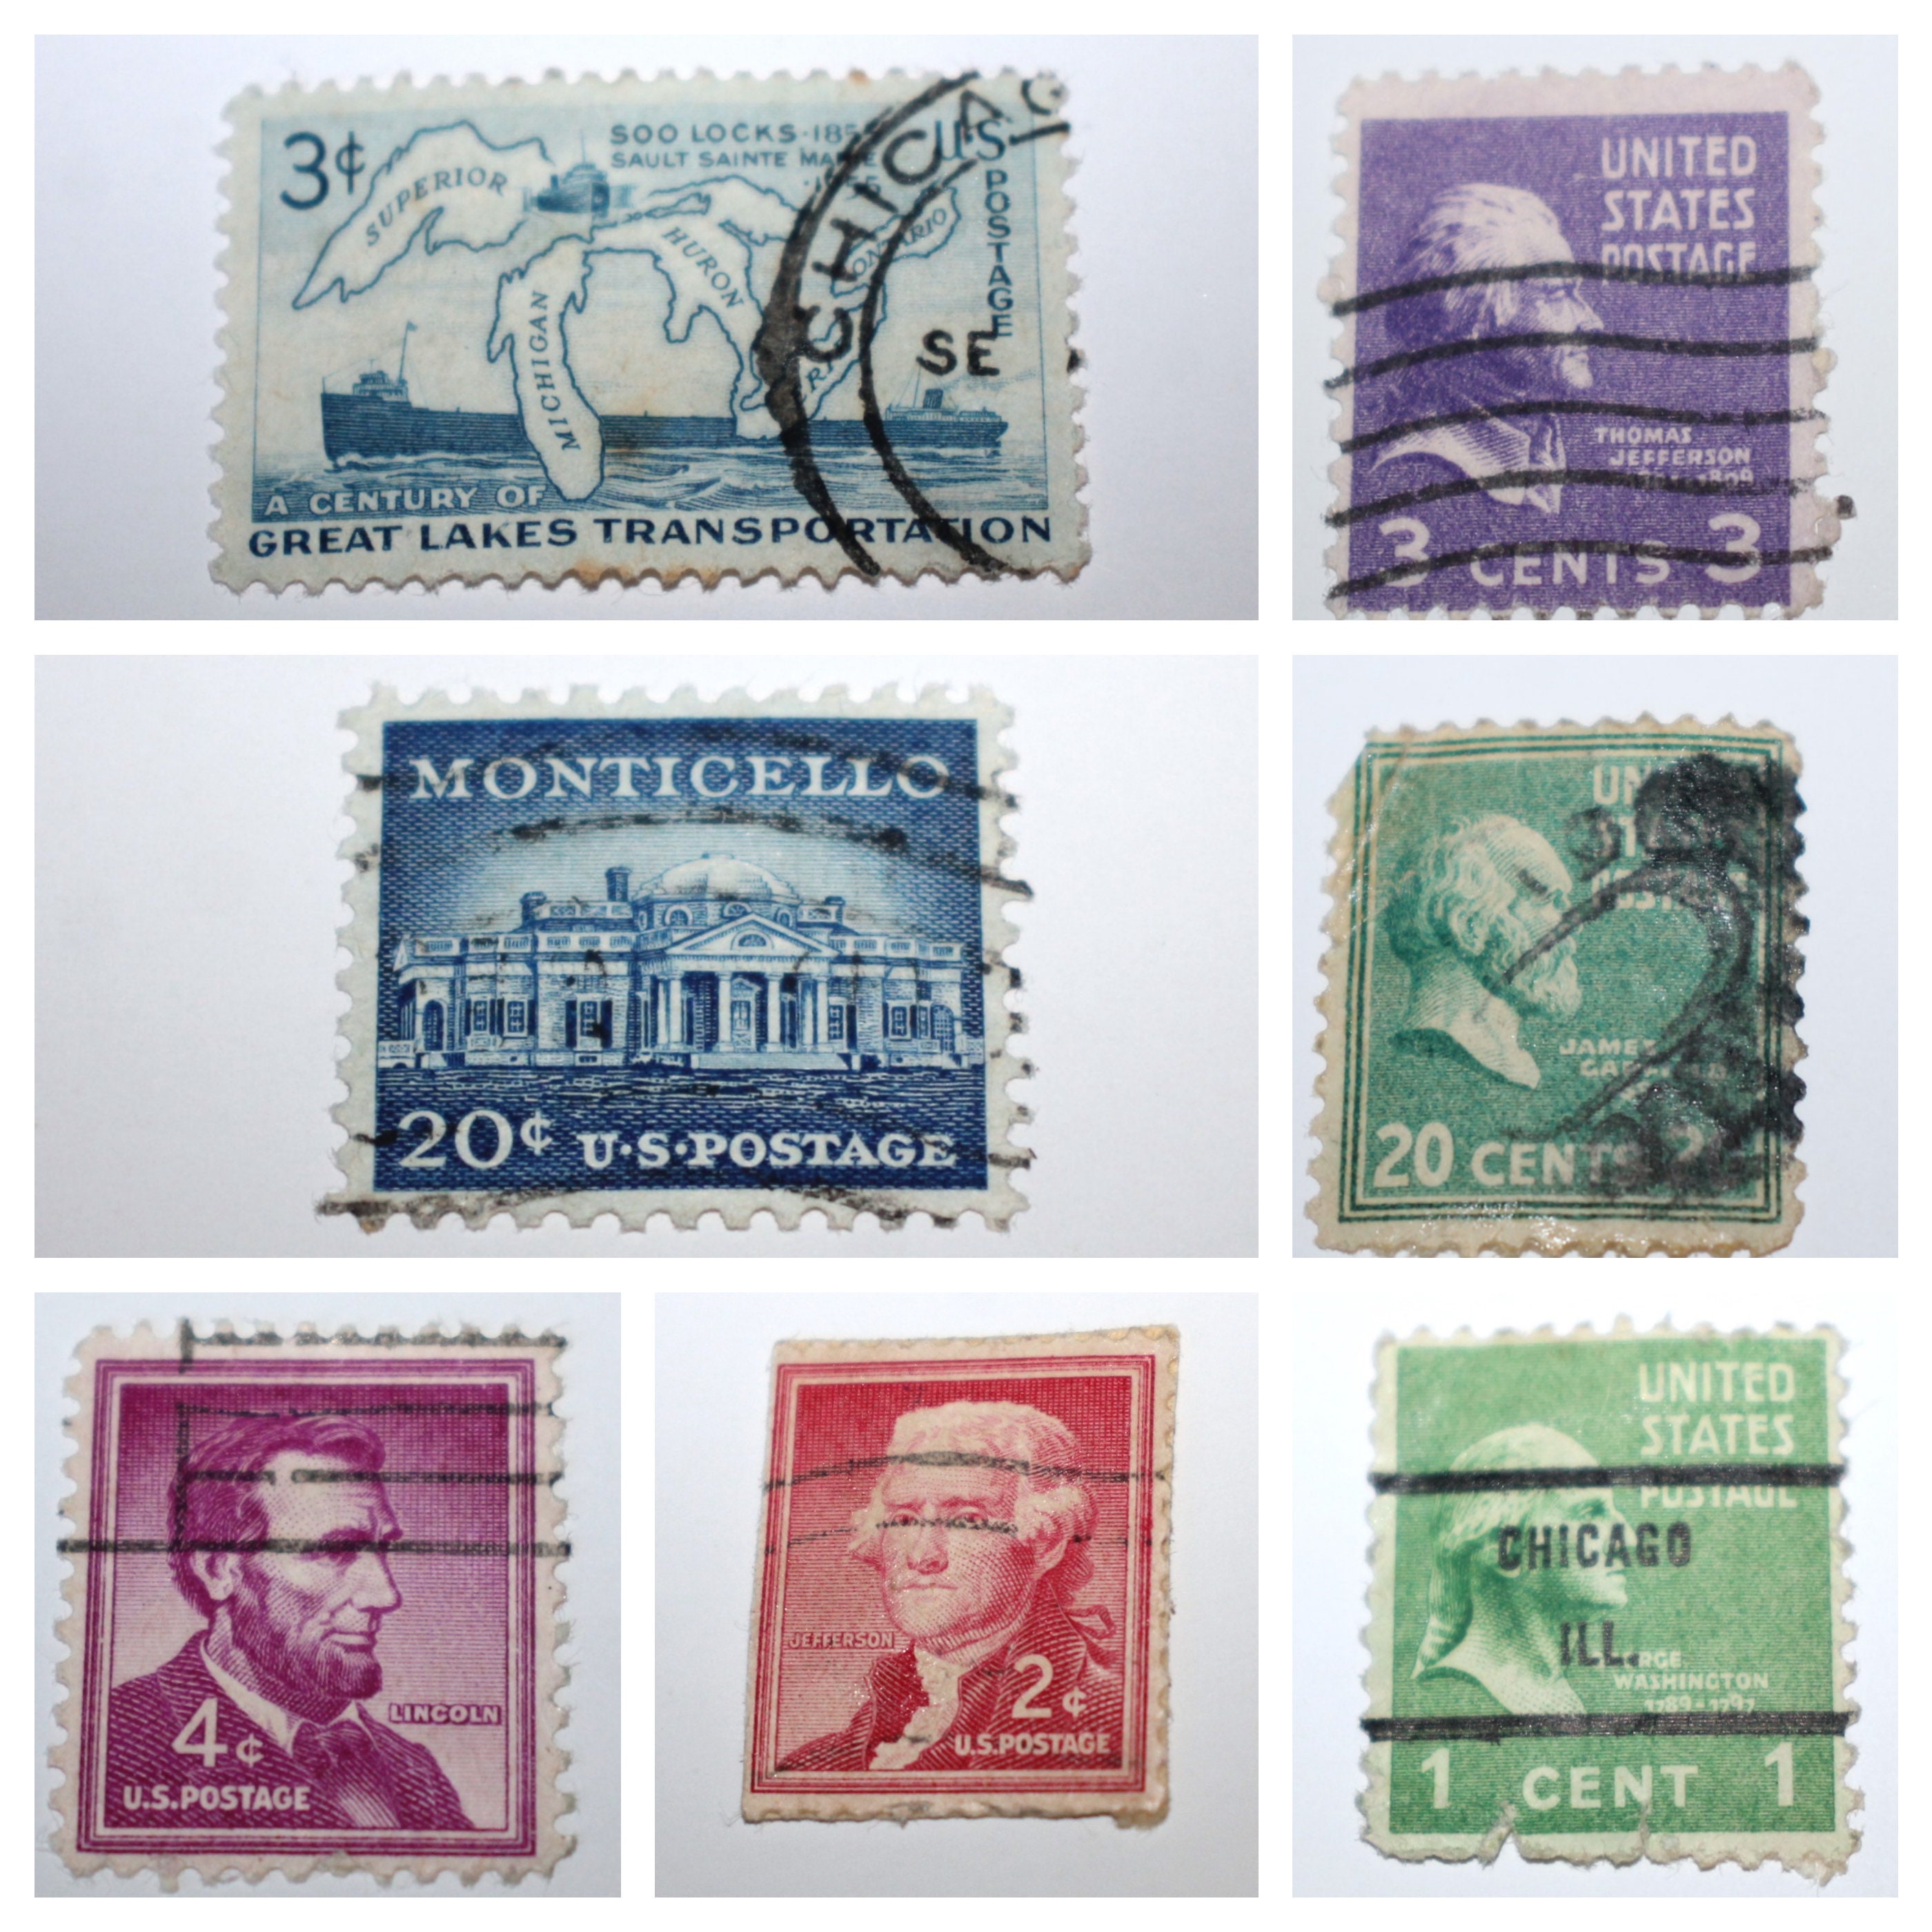 Ohio Statehood 3c Unused Vintage 1953 Postage Stamps for Mailing -  Collecting - Crafts. Scott Catalog 1018